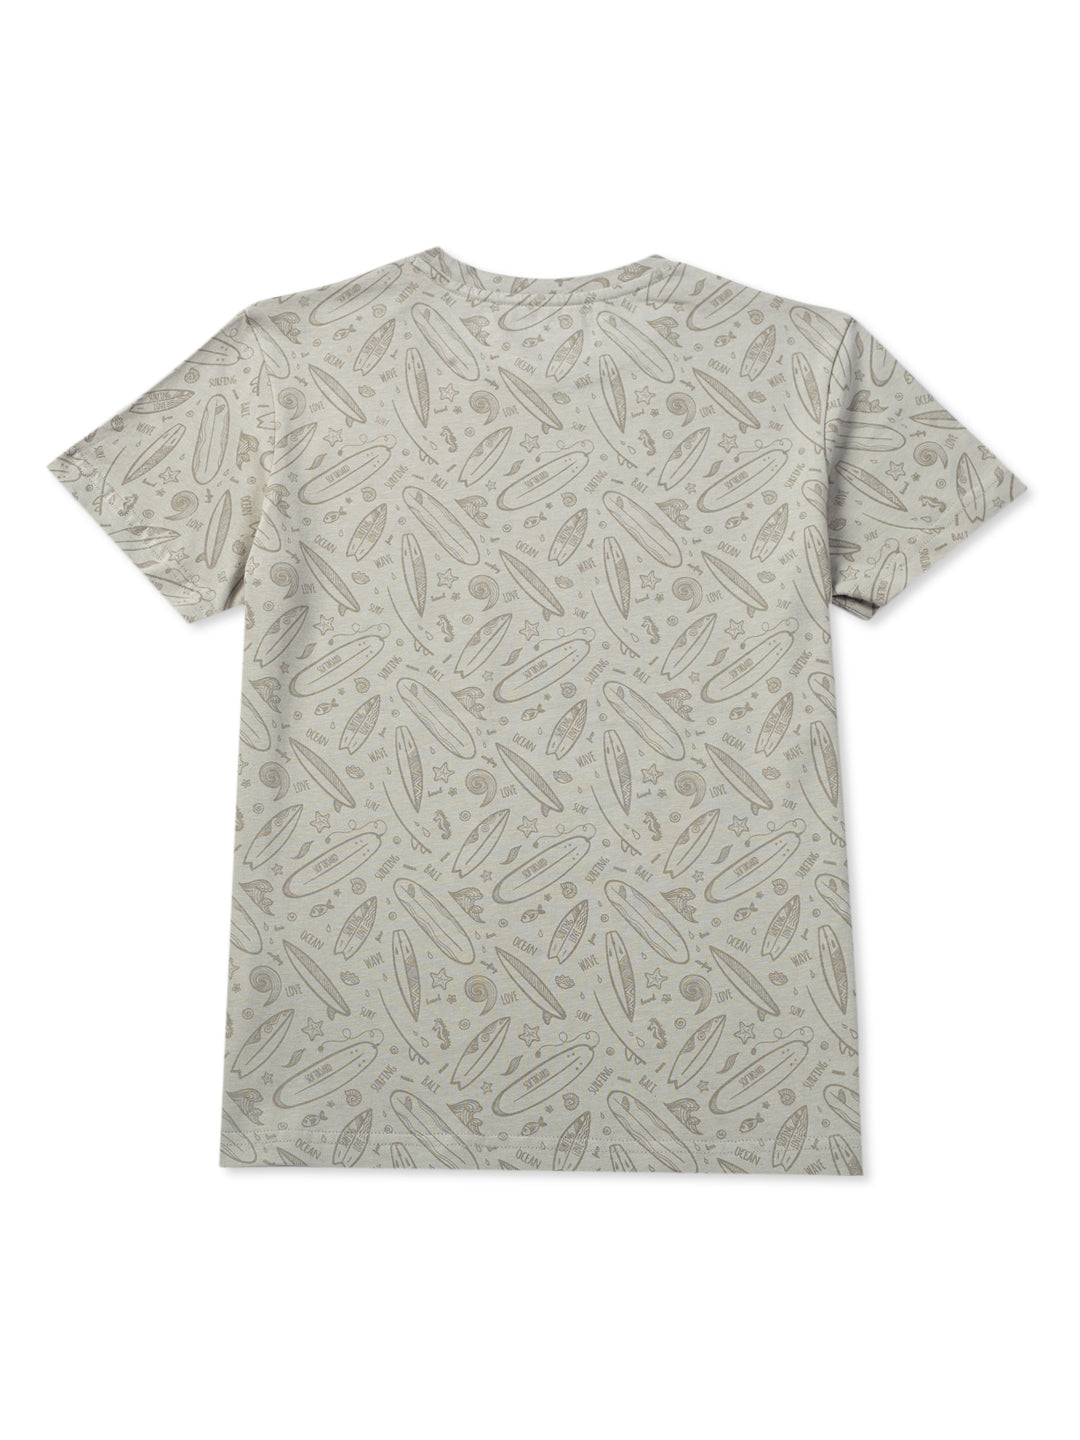 Boys Grey Cotton Printed T-Shirt